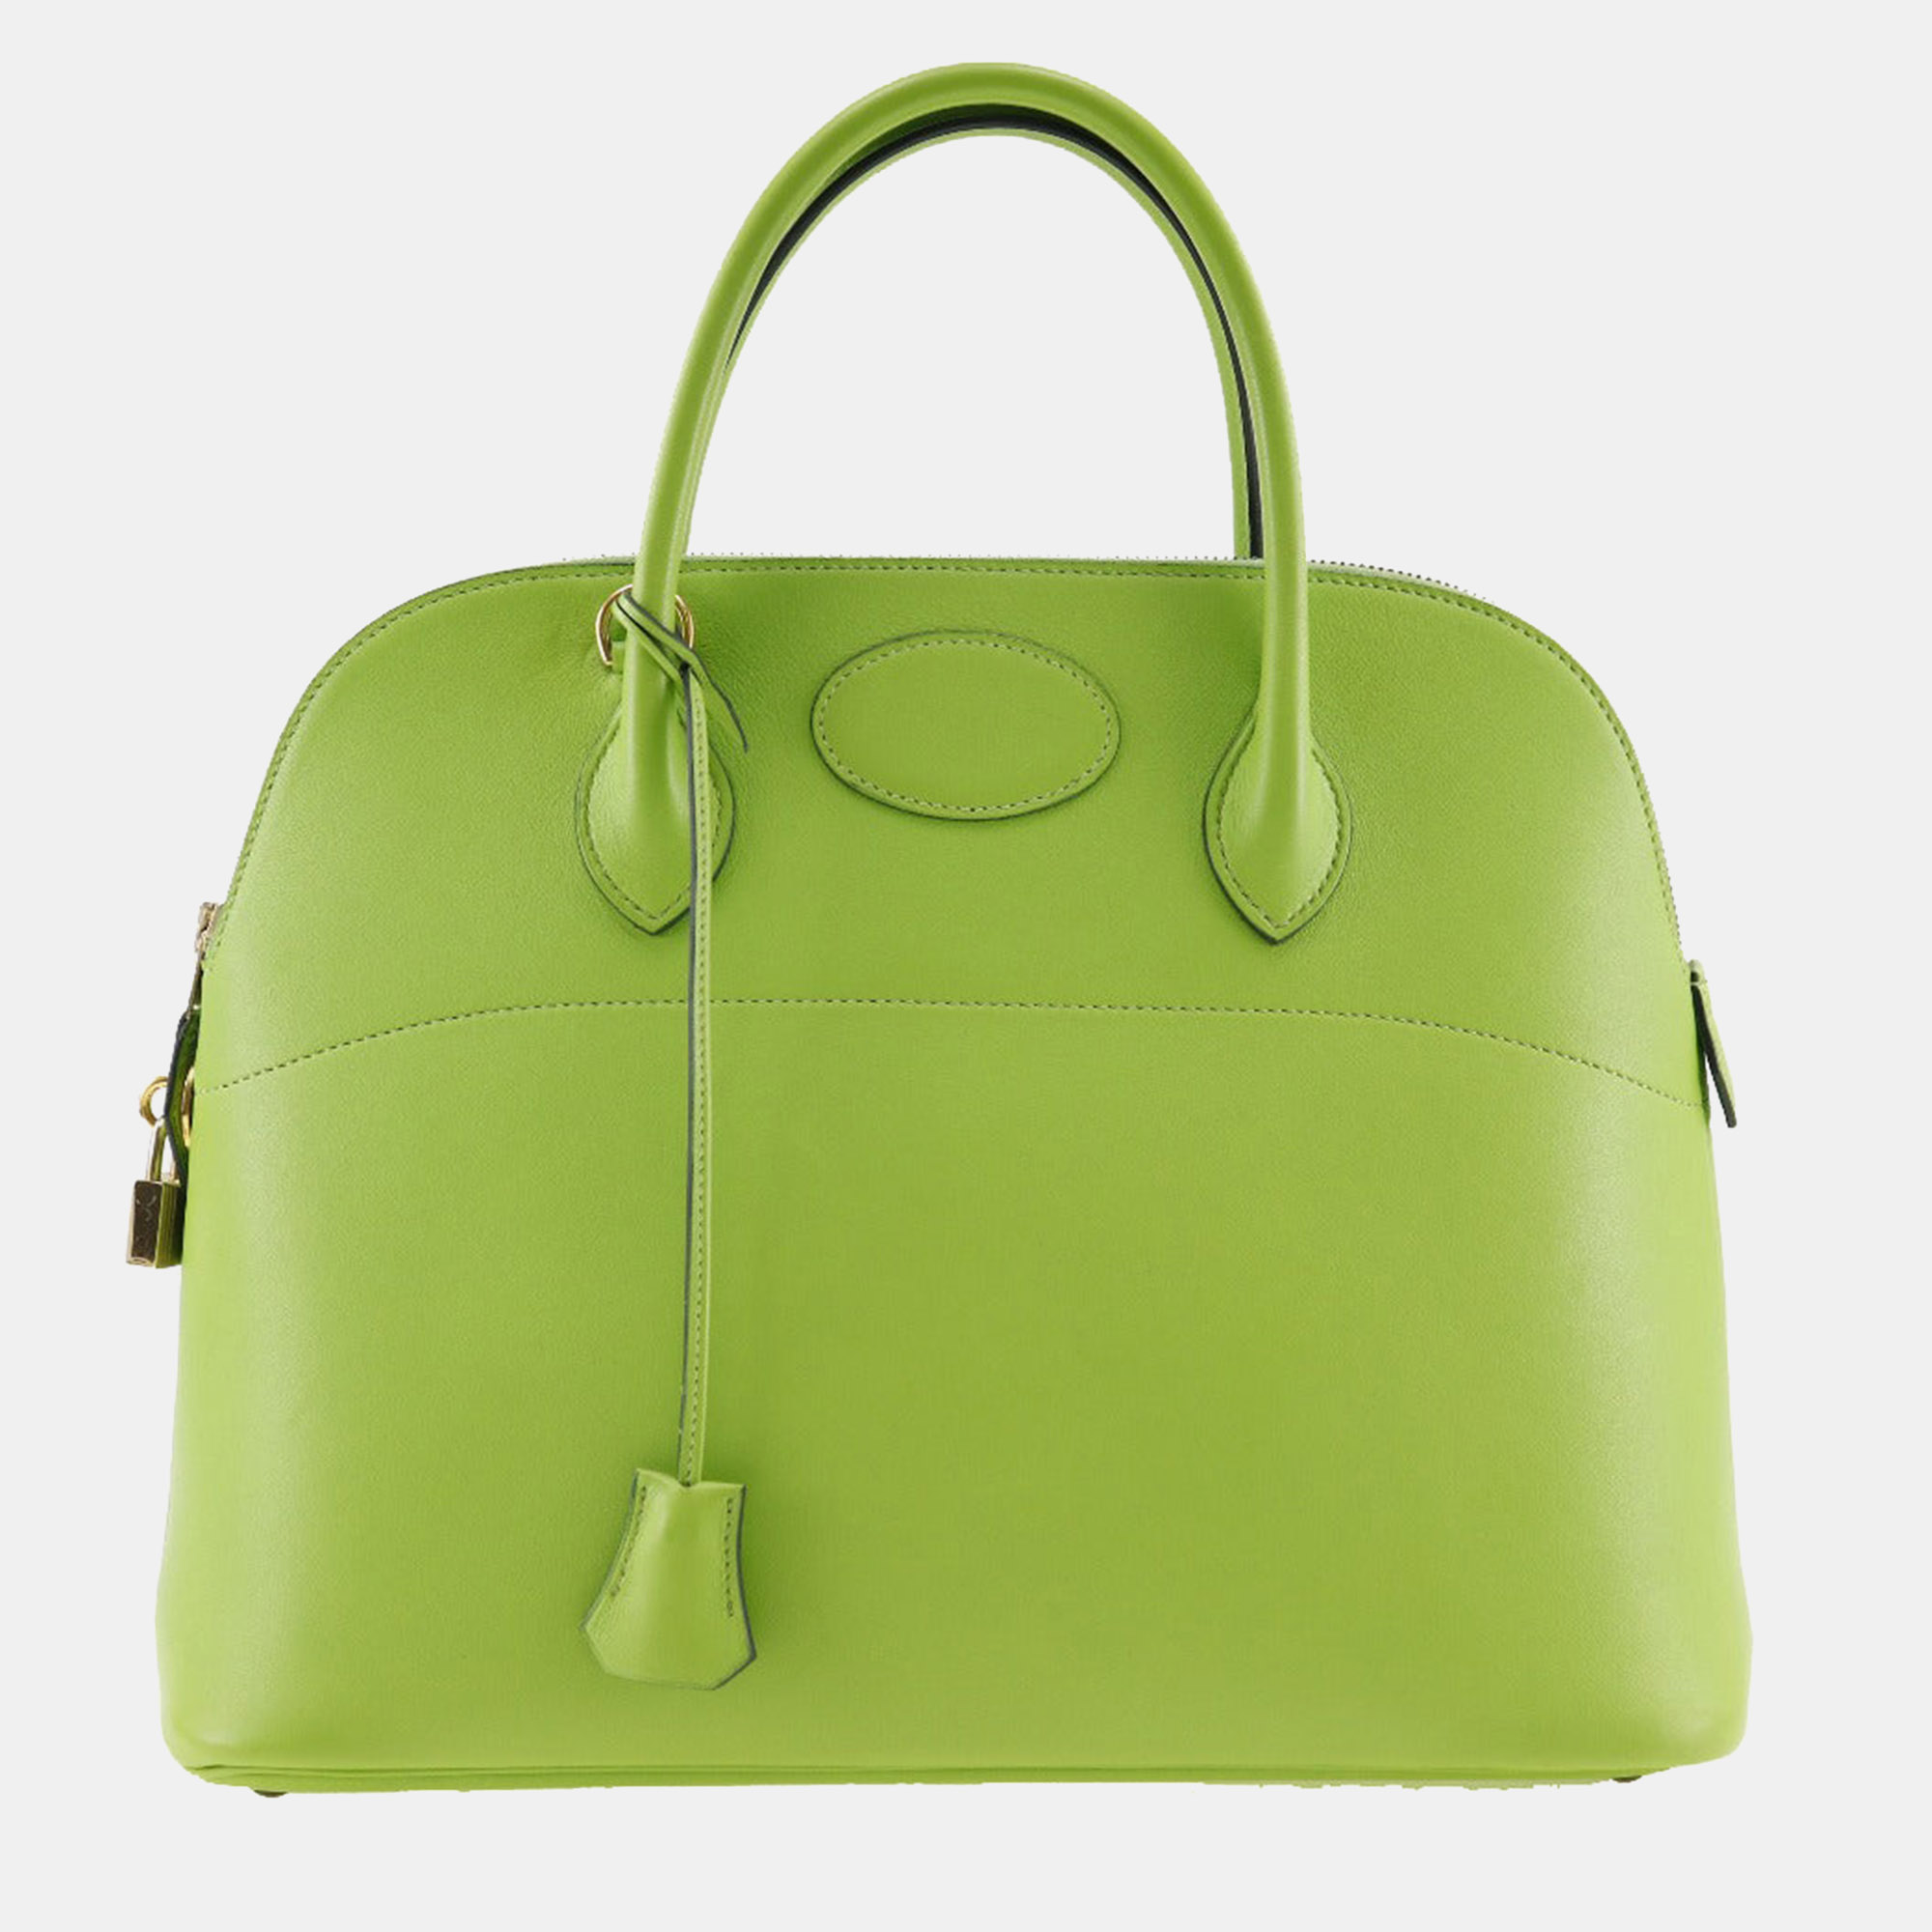 Hermes green leather gulliver bolide handbag